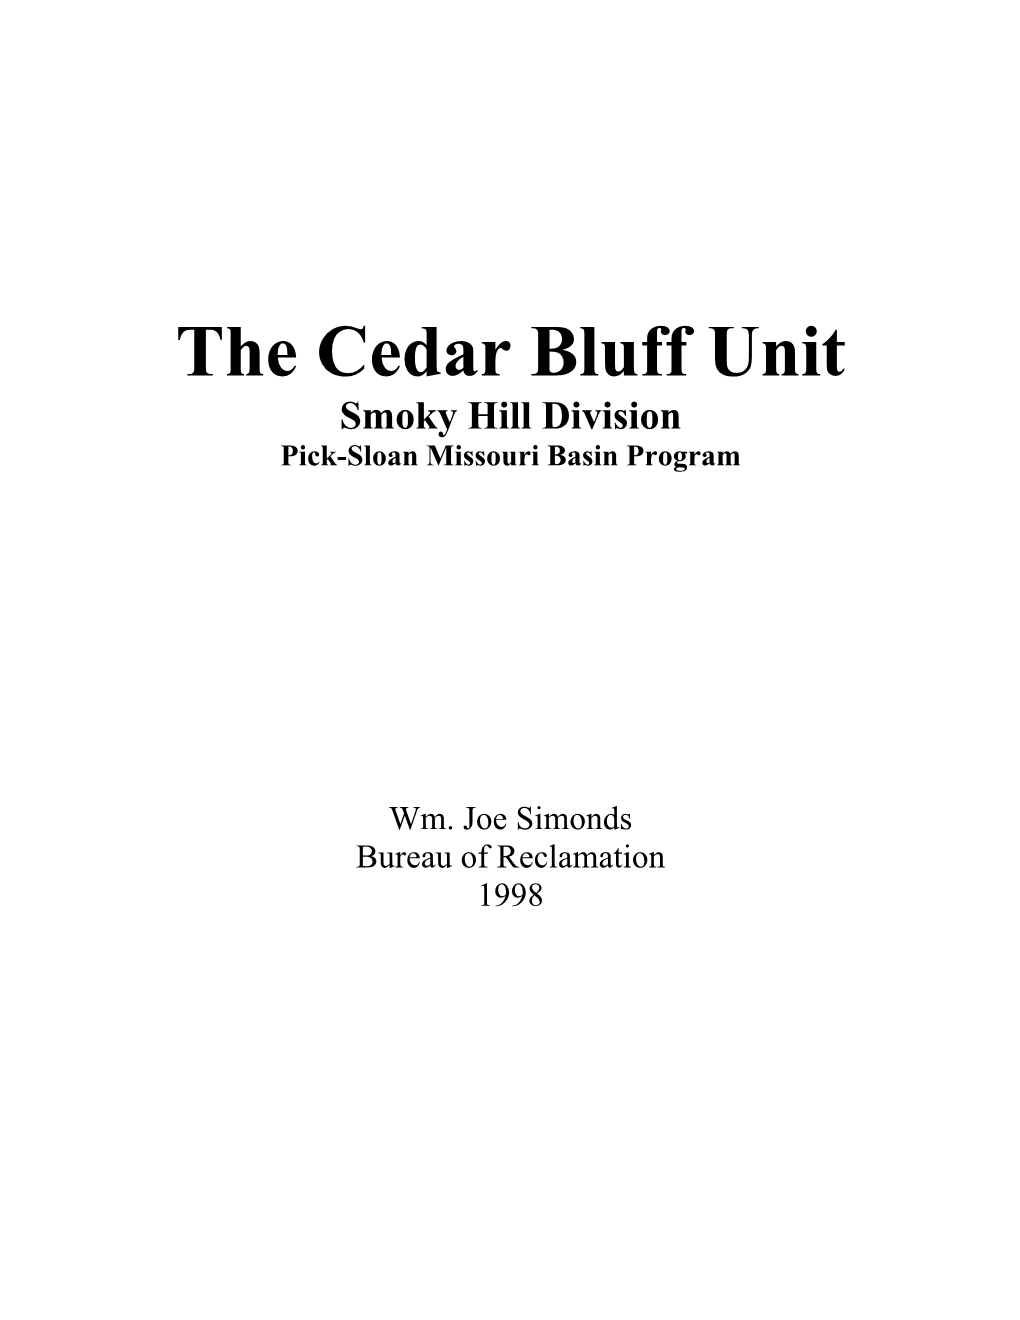 The Cedar Bluff Unit Smoky Hill Division Pick-Sloan Missouri Basin Program